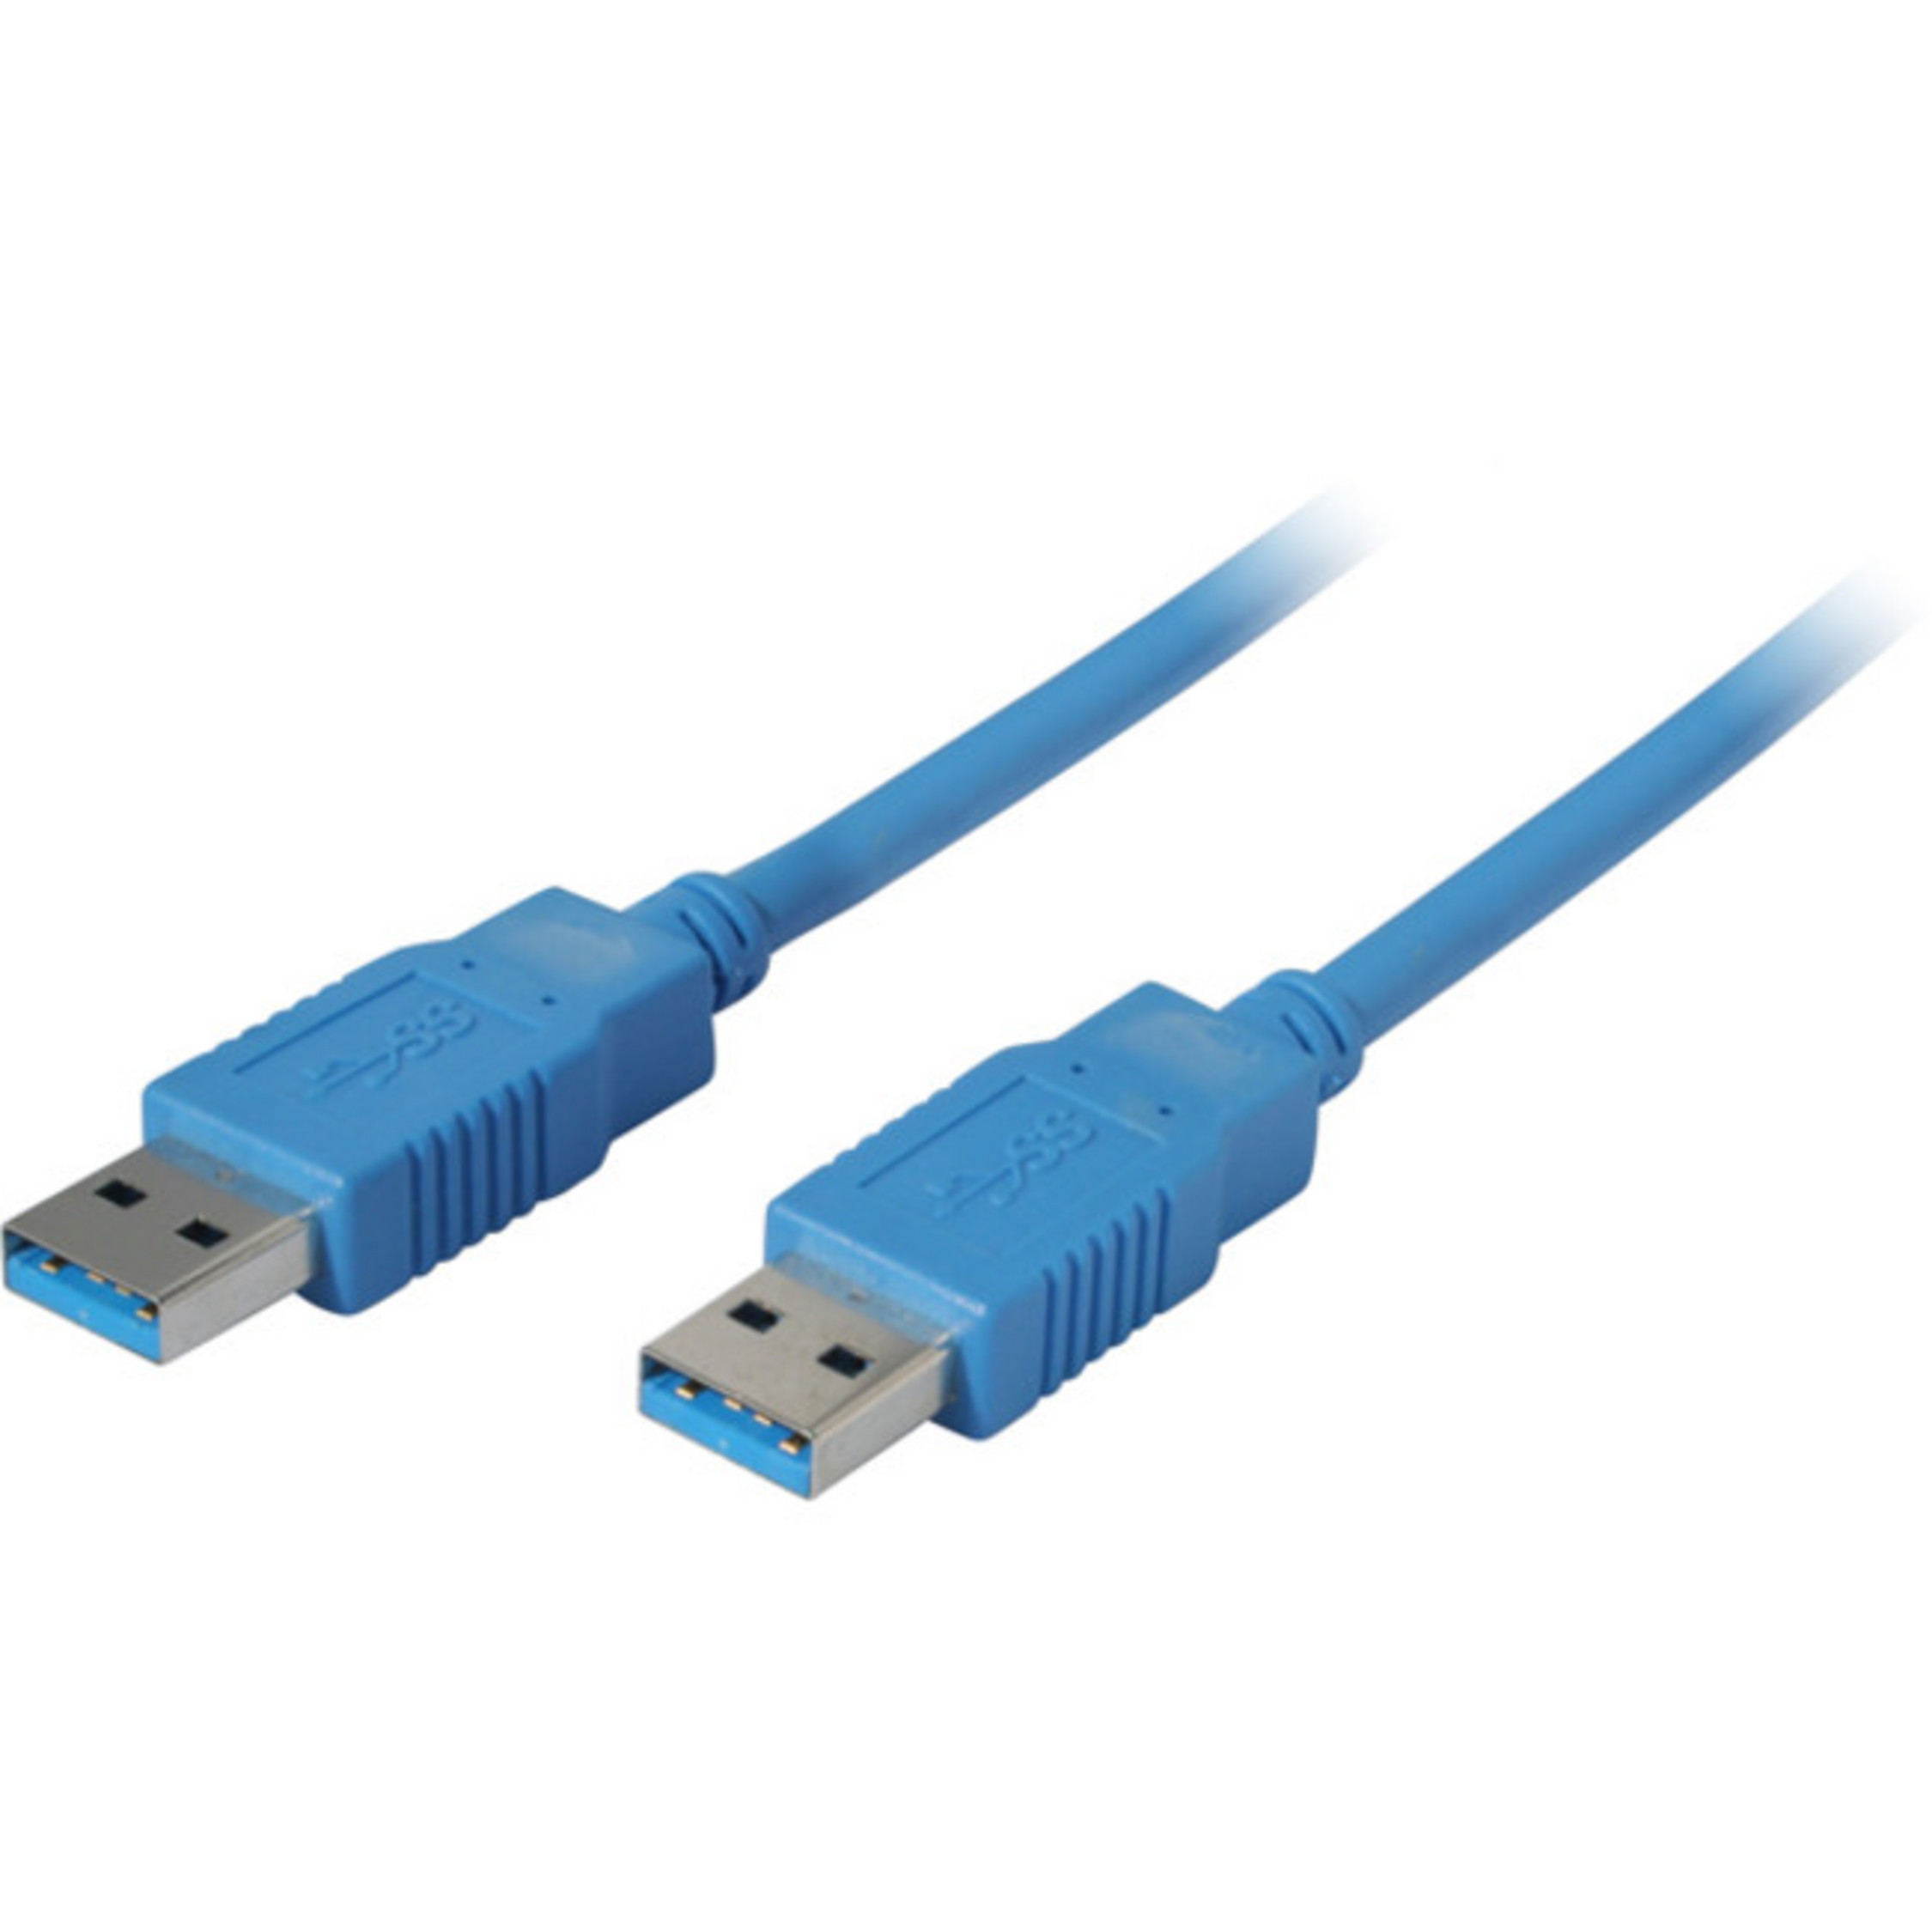 S/CONN MAXIMUM CONNECTIVITY Kabel 3.0 3m blau Kabel Stecker A USB A USB Stecker USB 